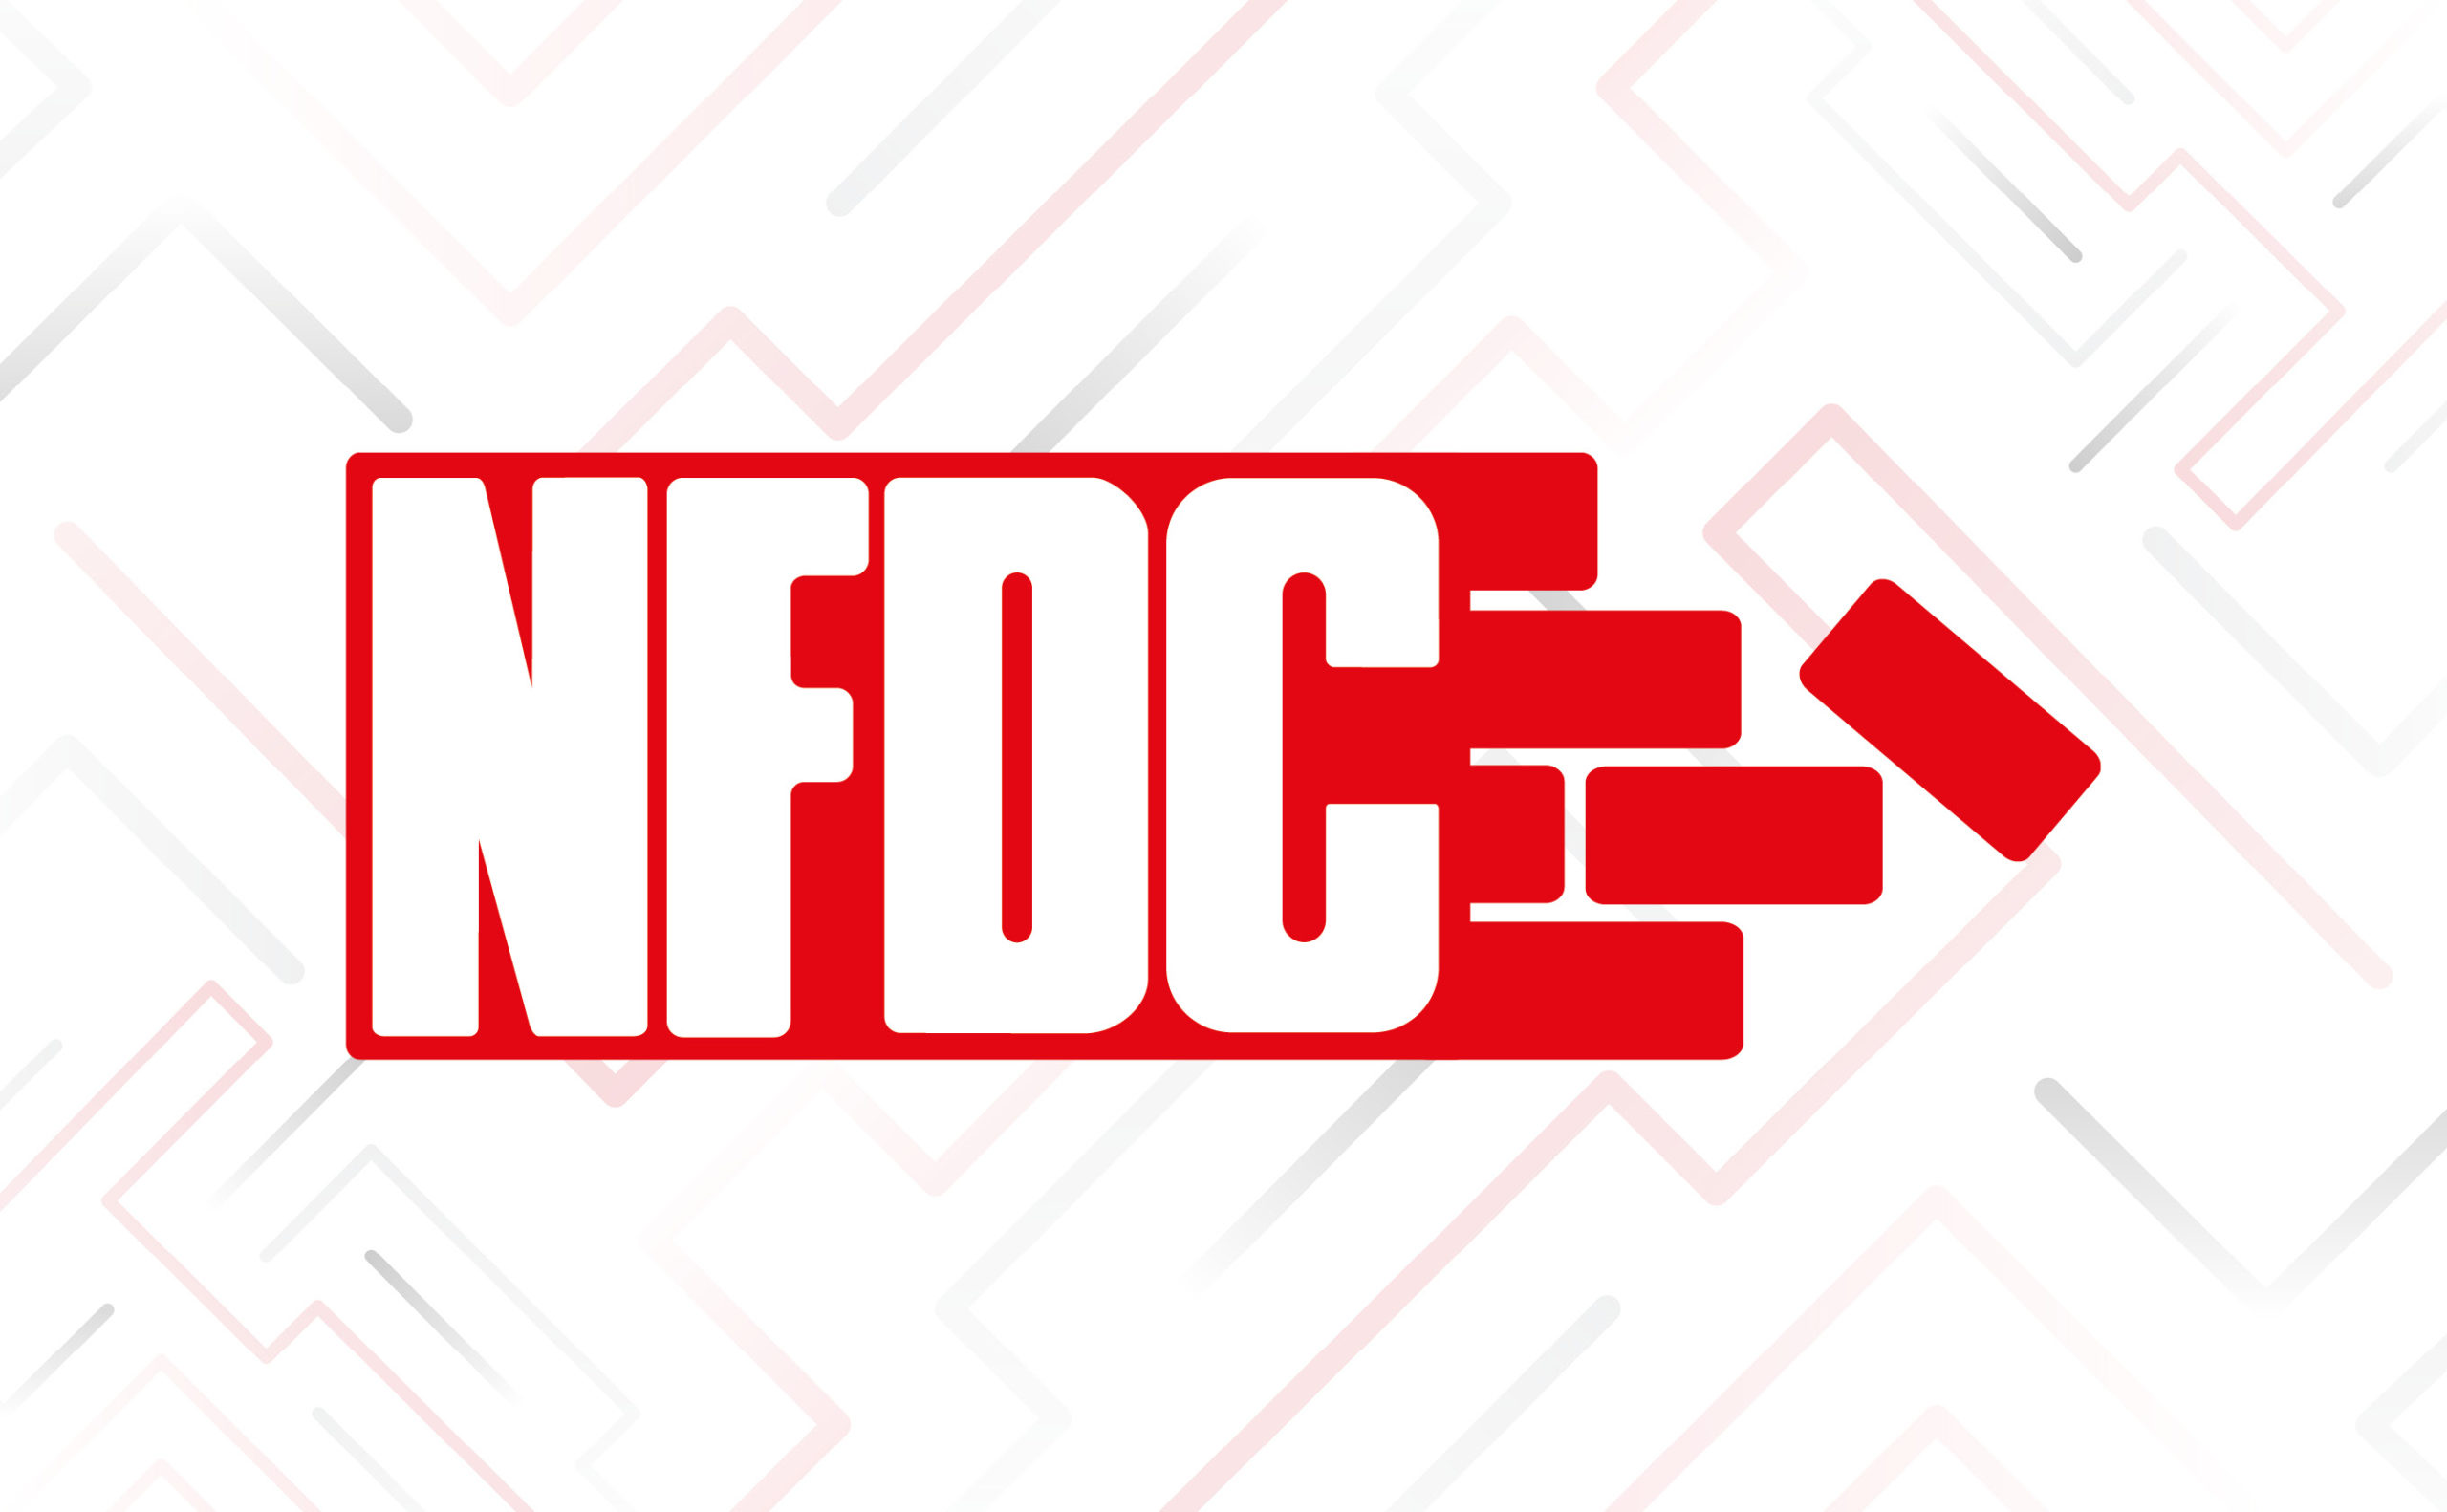 NFDC Statement – Oxford Street Redevelopment